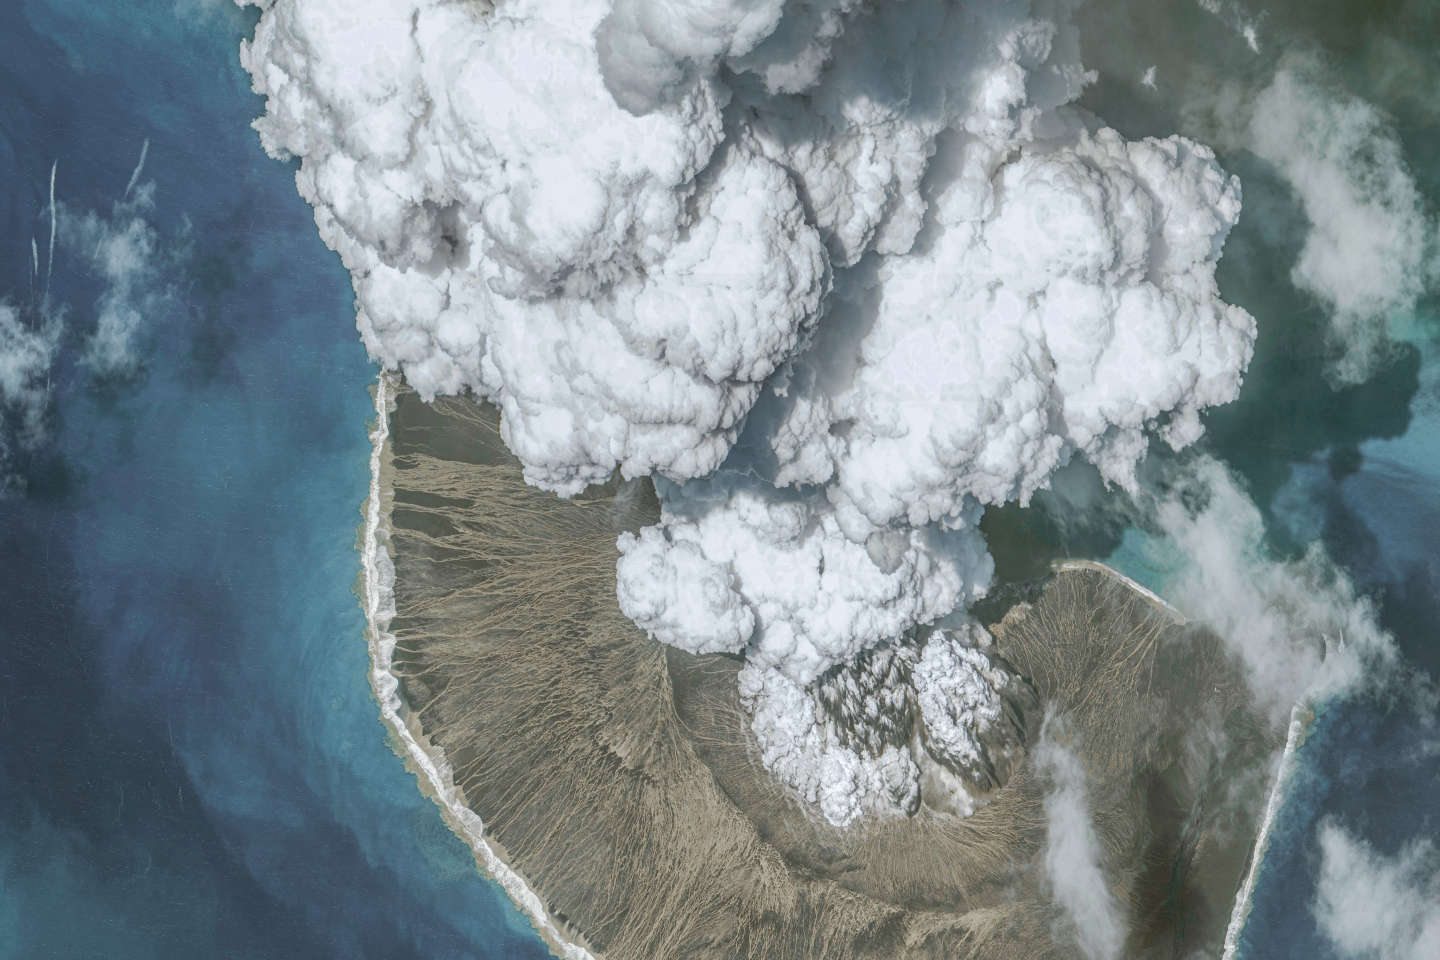 Le volcan Hunga Tonga, à l’origine d’un tsunami hors norme